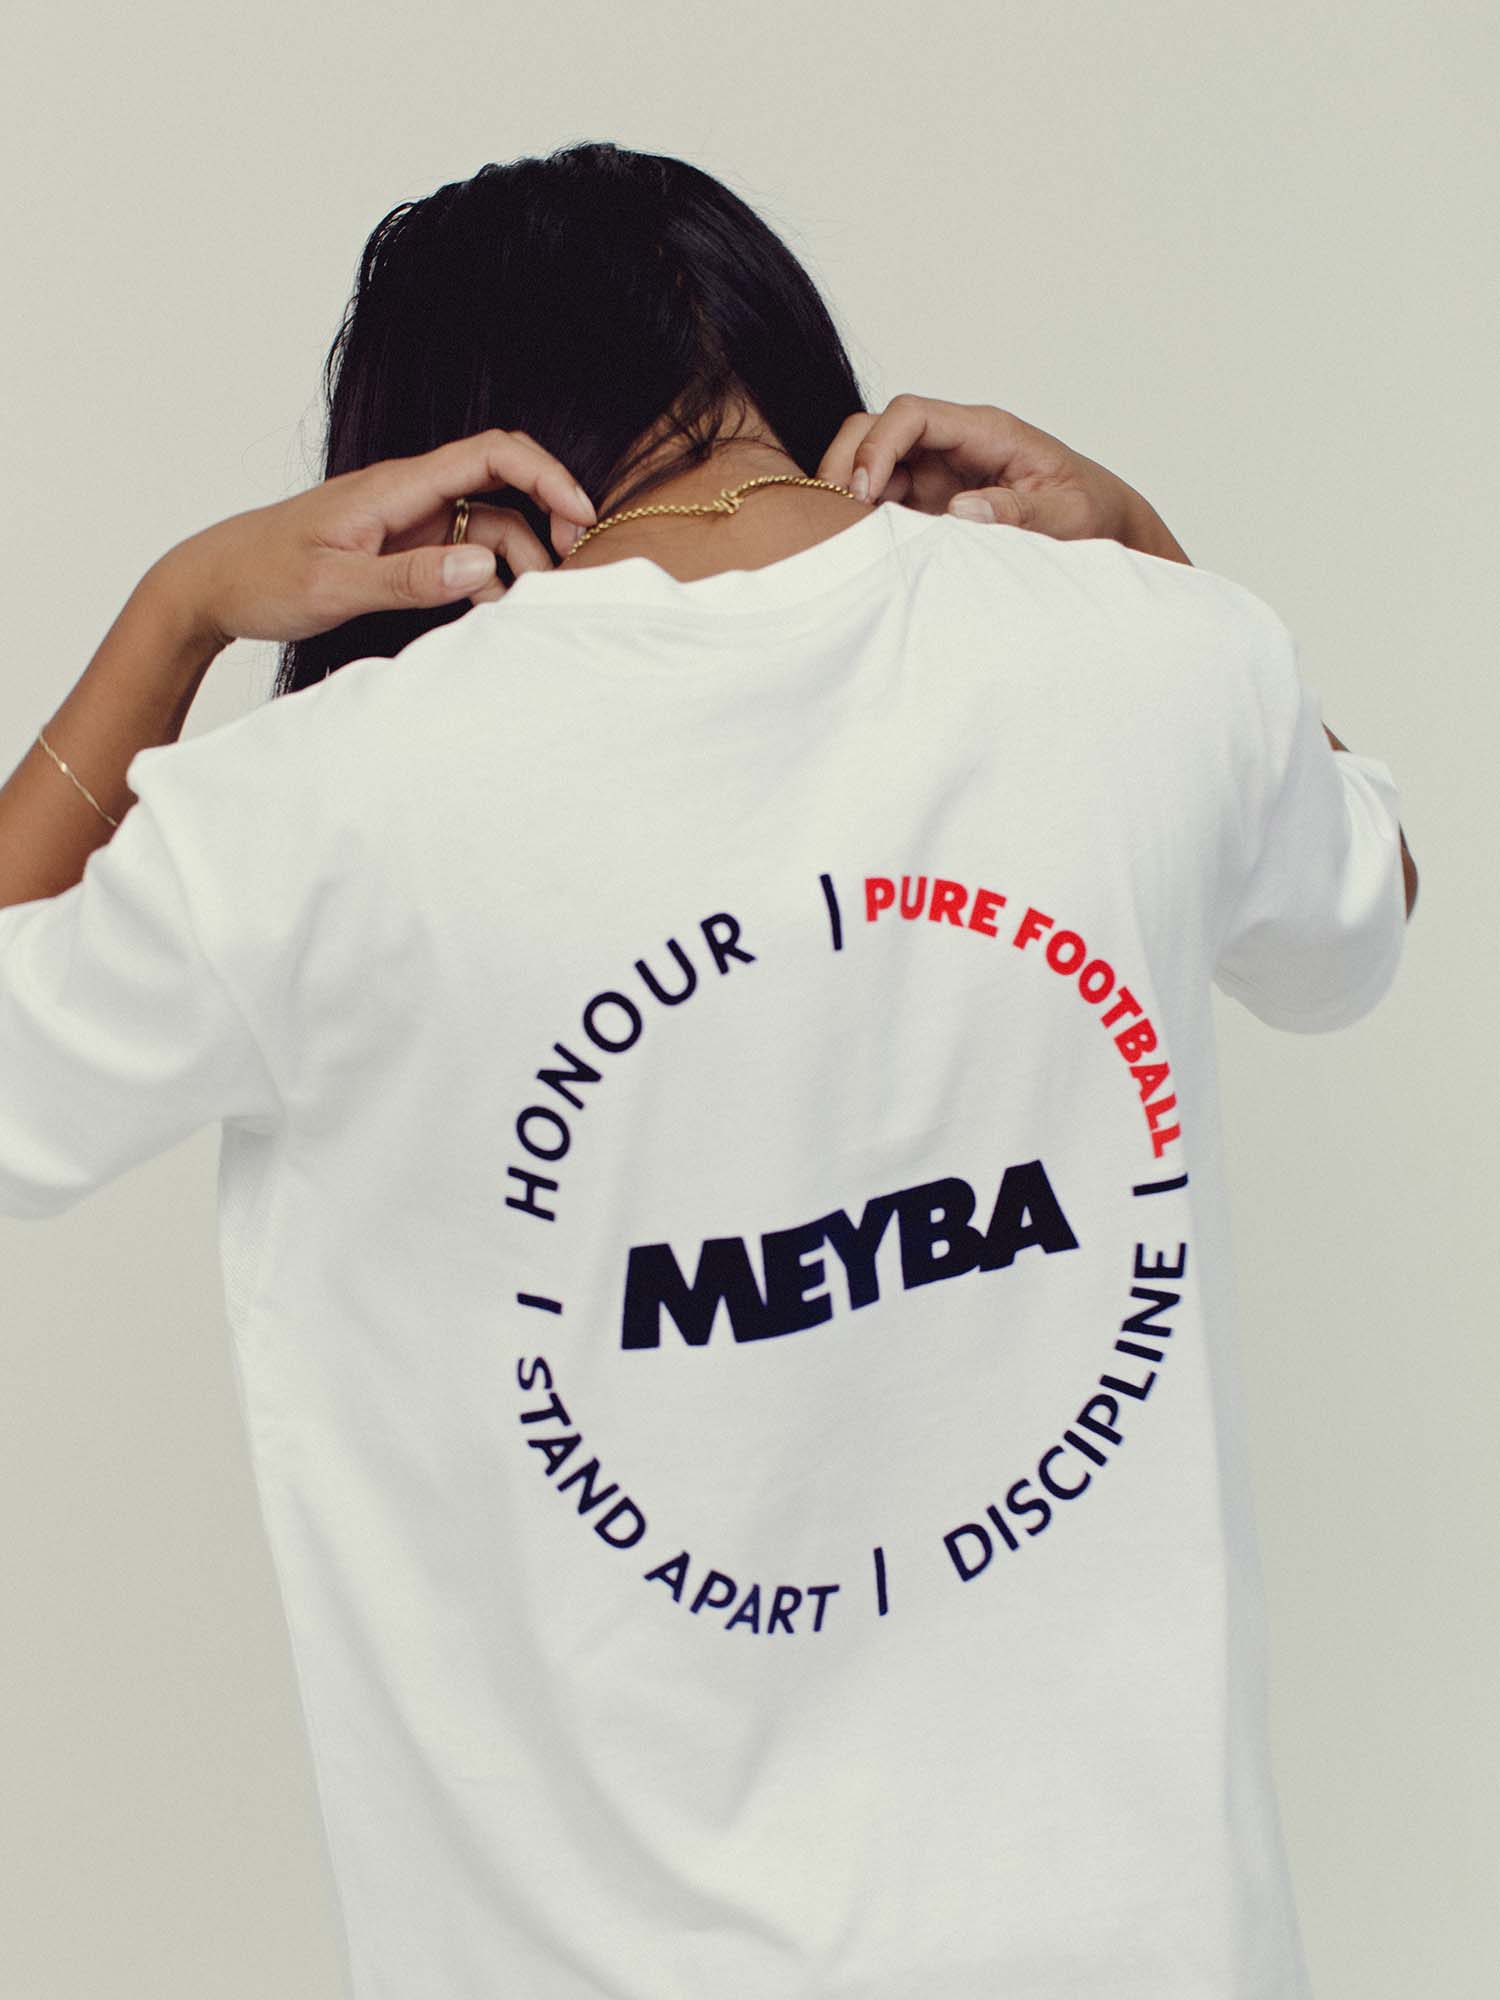 Meyba launch portrait soccerbible_0011_IMG_7389-Edit.jpg